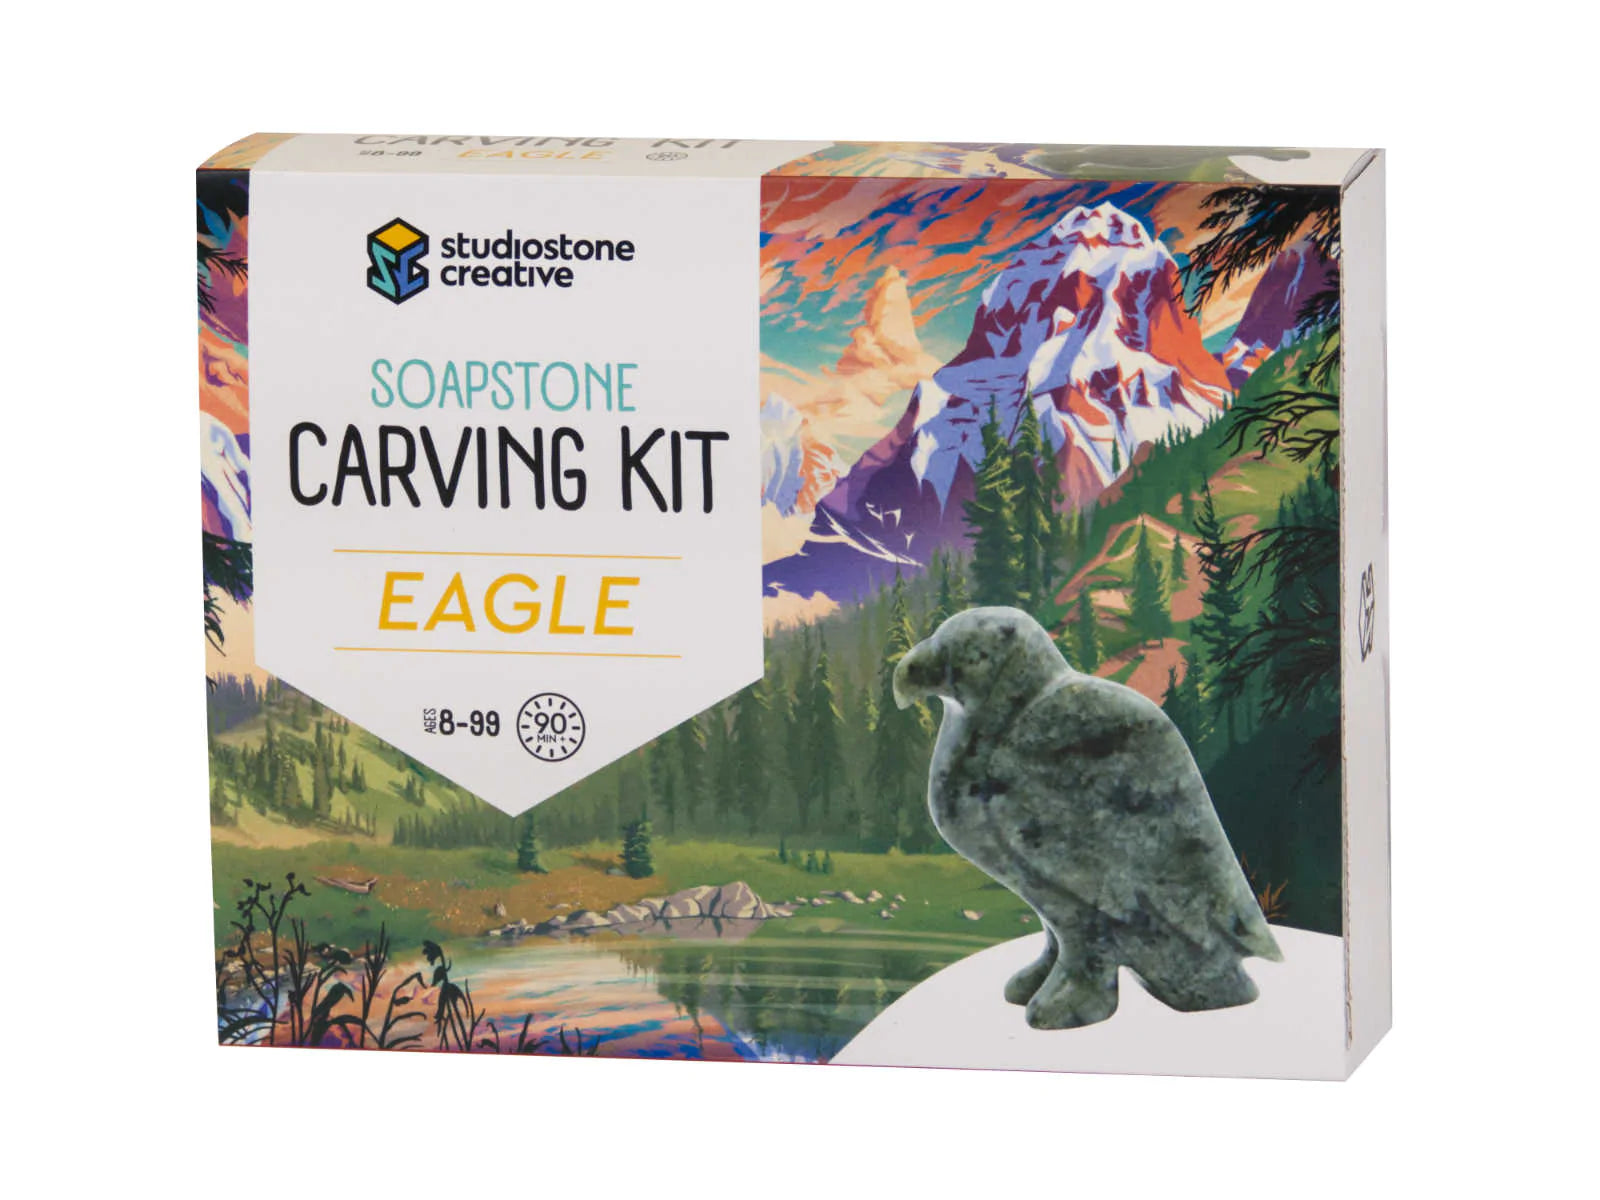 Eagle Soapstone Carving Kit by Studiostone Creative